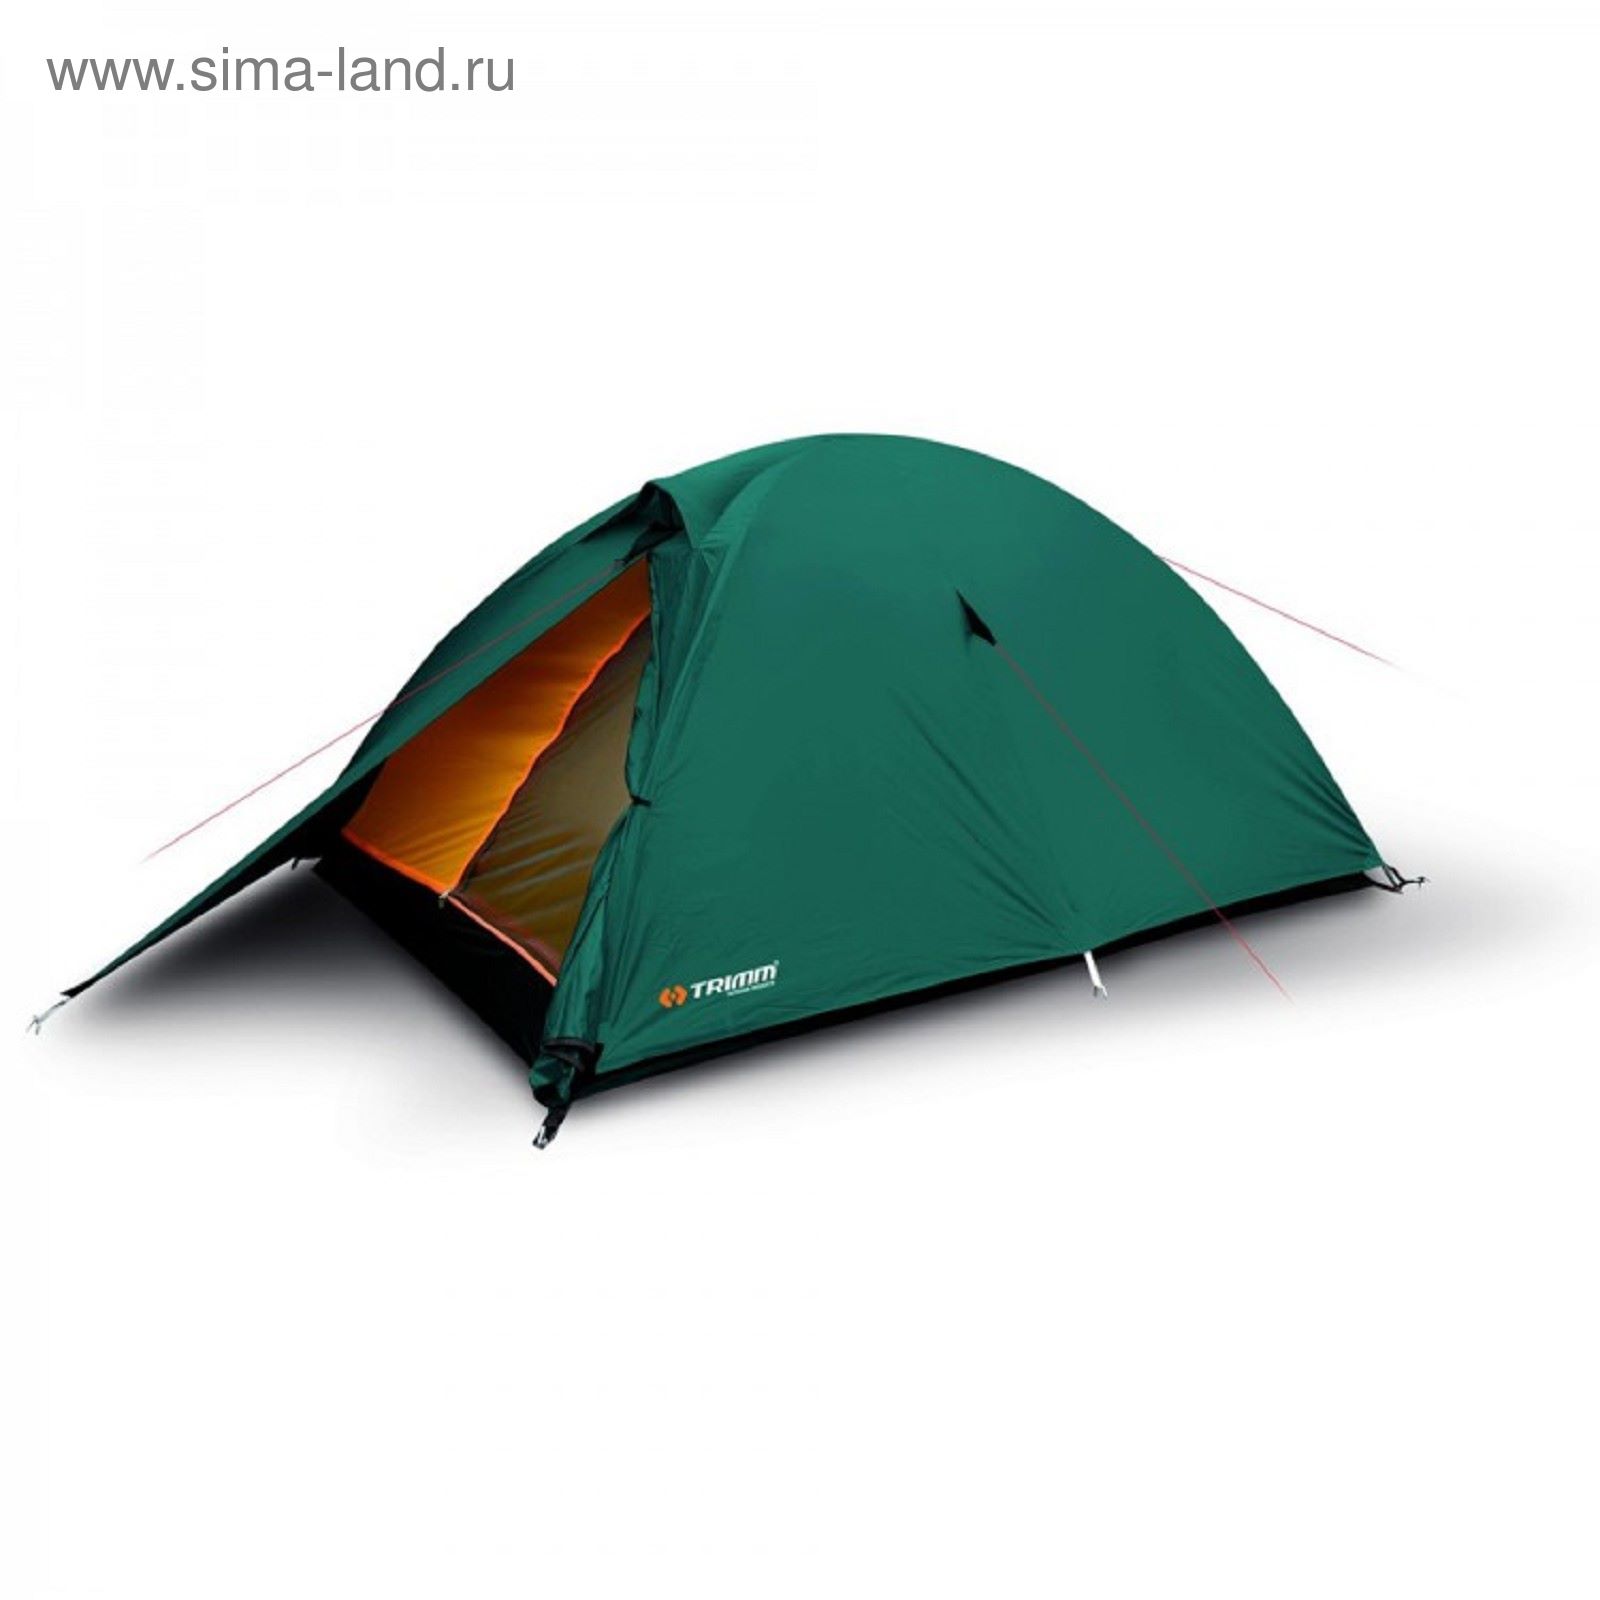 Туристические палатки спб. Палатка Trimm Outdoor Comet. Палатка Trimm Comet песочный. Палатка Trimm Comet зеленый. Палатка Trimm Hudson, зеленый 3+1.